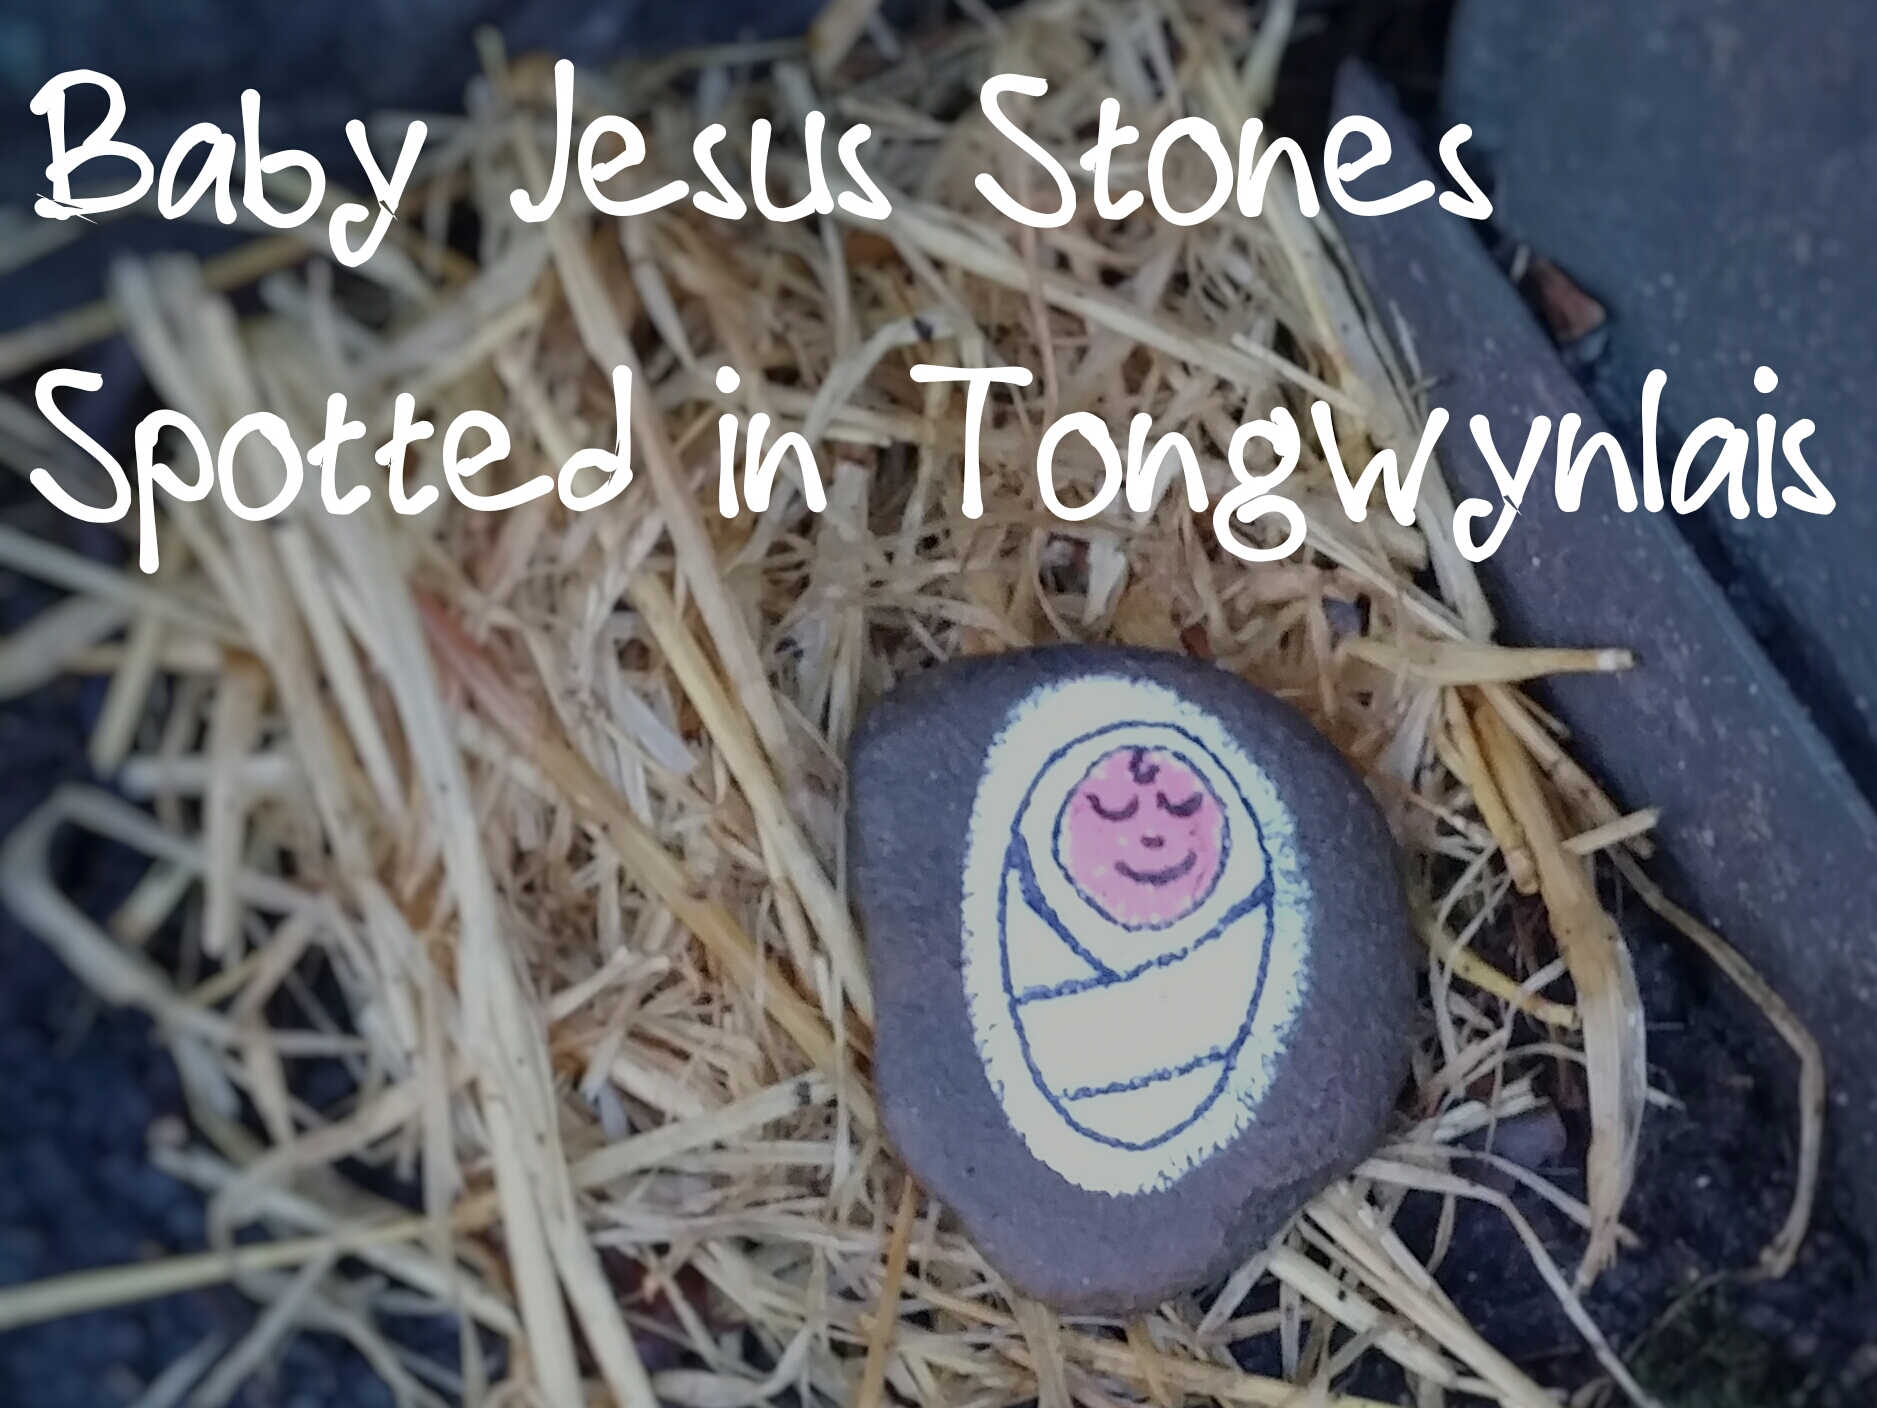 Baby Jesus stones header